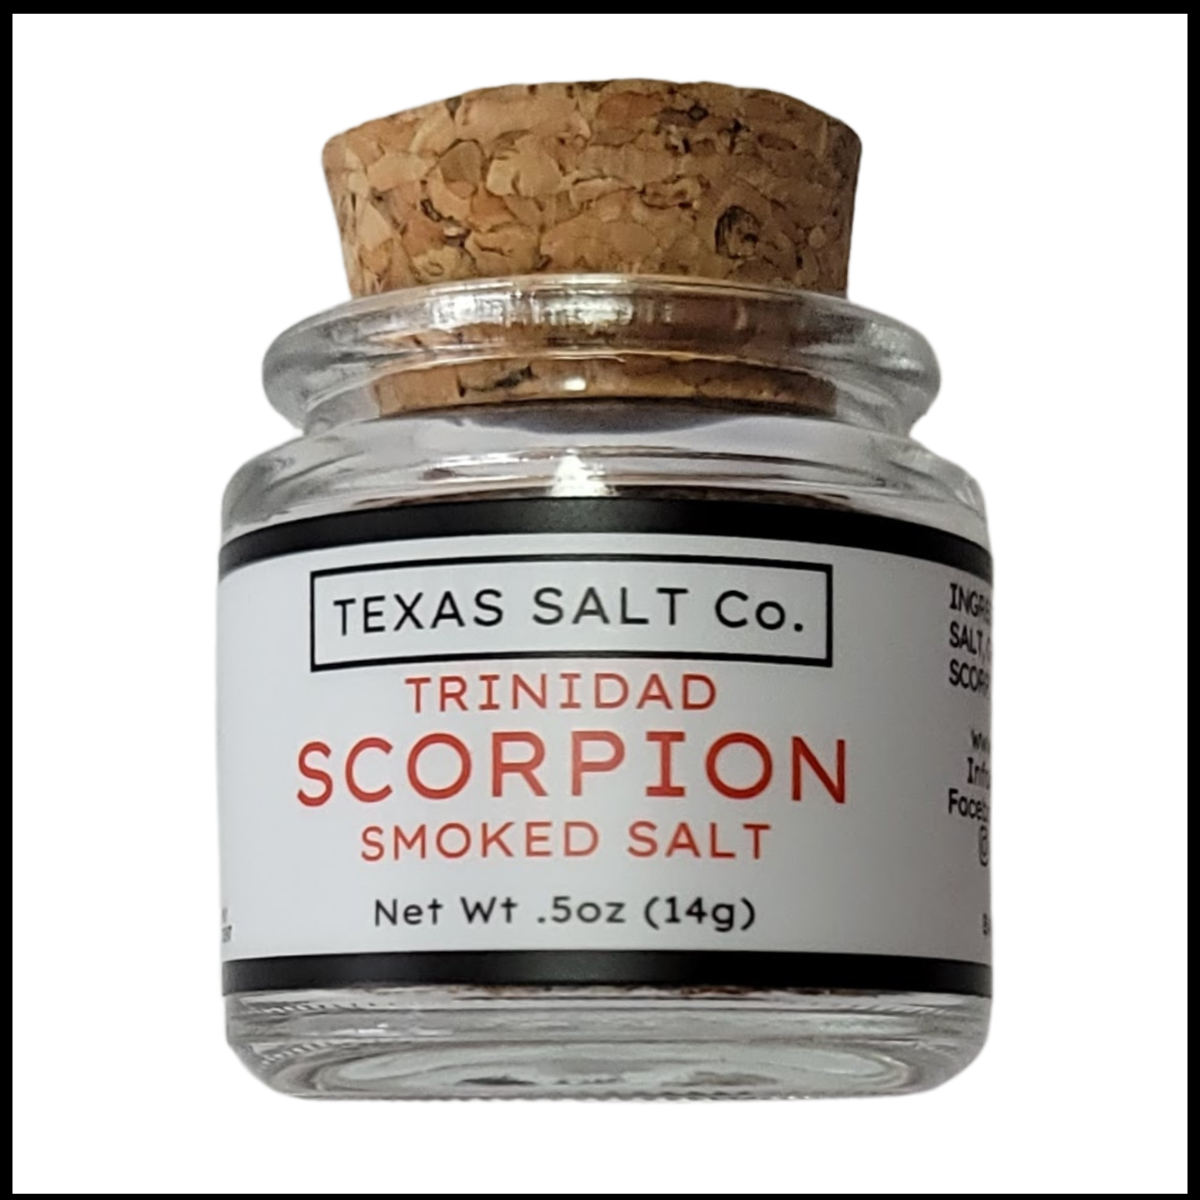 scorpion smoked salt cork top